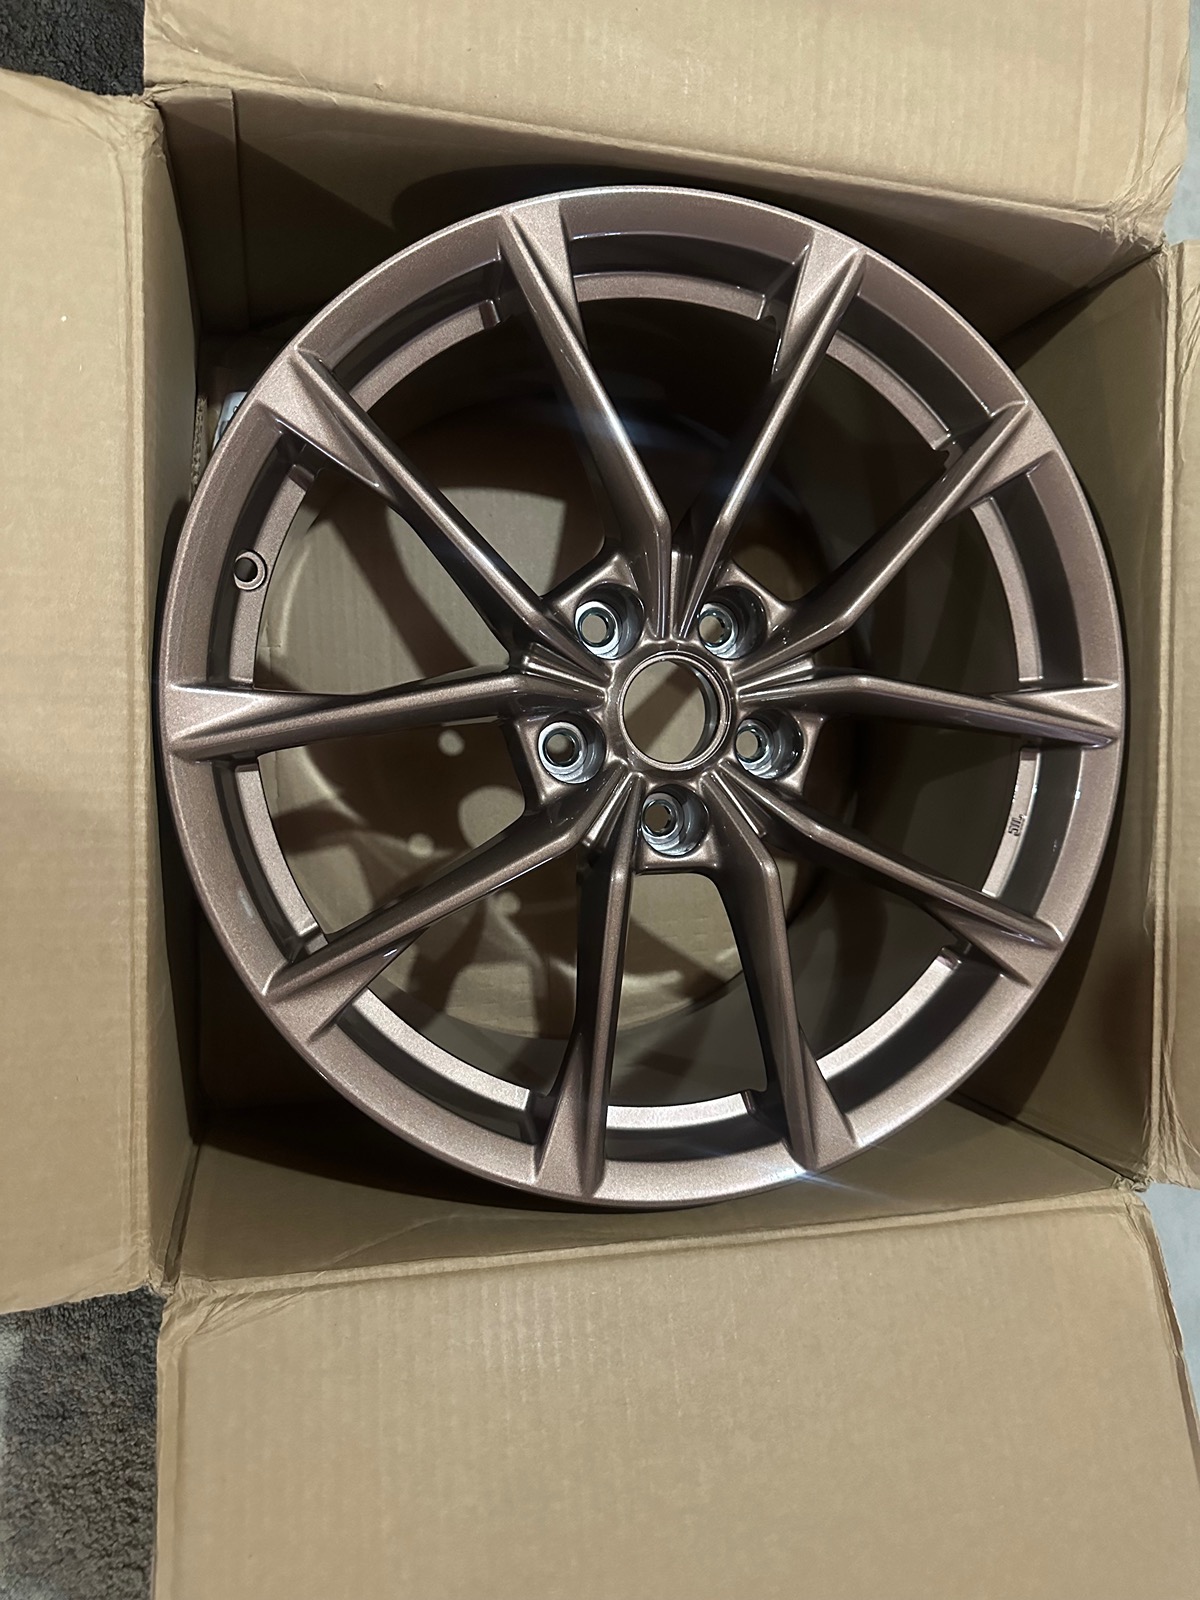 11th Gen Honda Civic FS: Brand new OEM bronze Integra Type S 19" accessory wheels IMG_2217